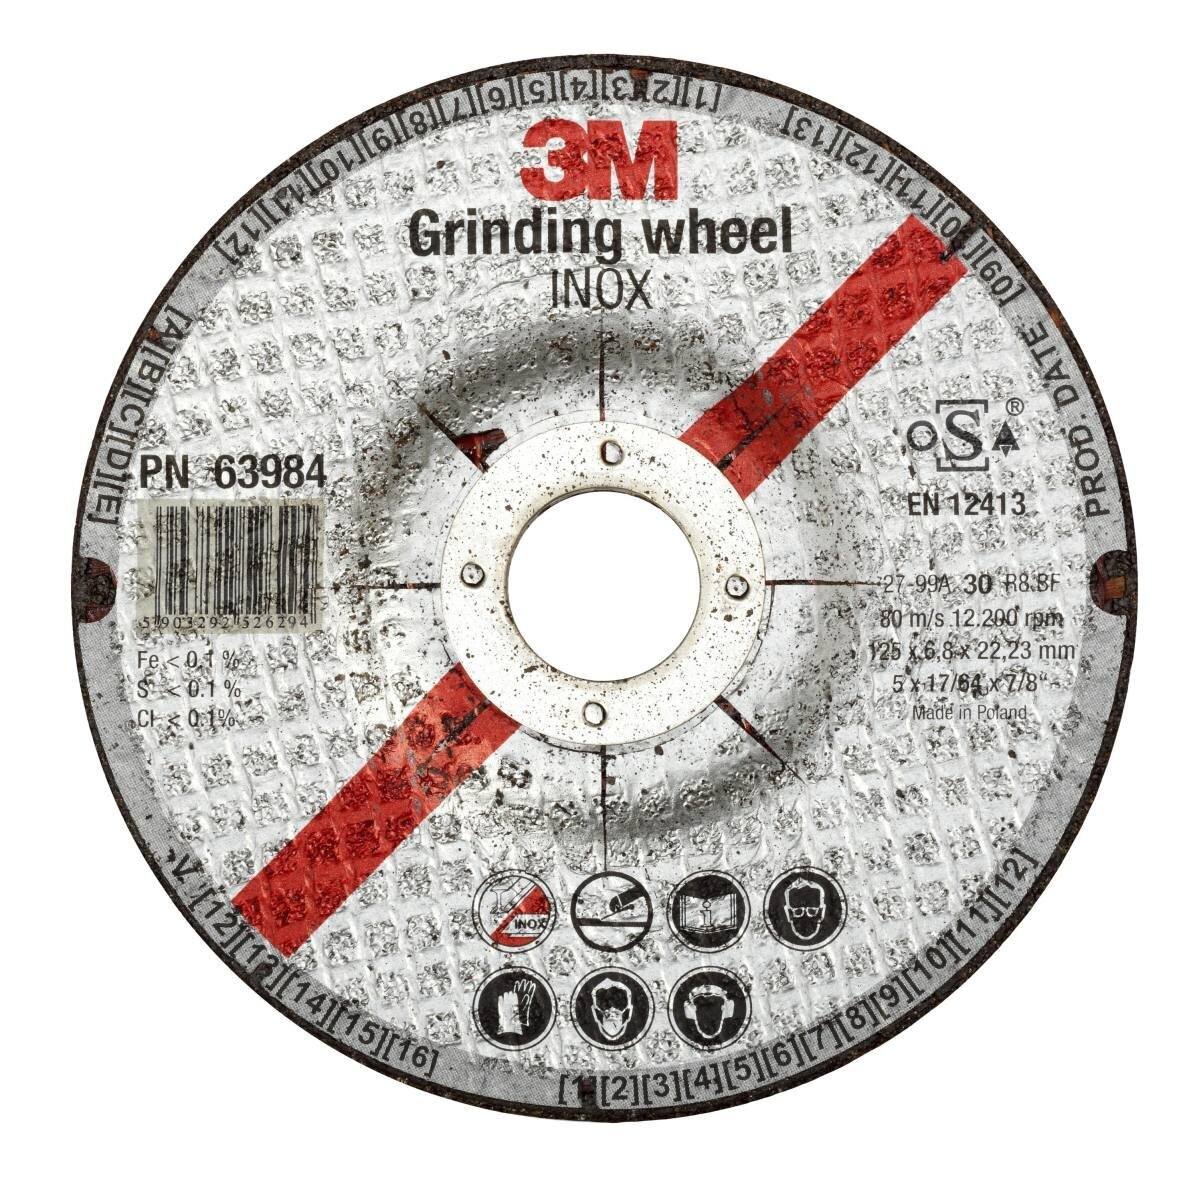 3M grinding disc INOX, 180 mm, 6.8 mm, 22.23 mm, P30, type 27 #63985